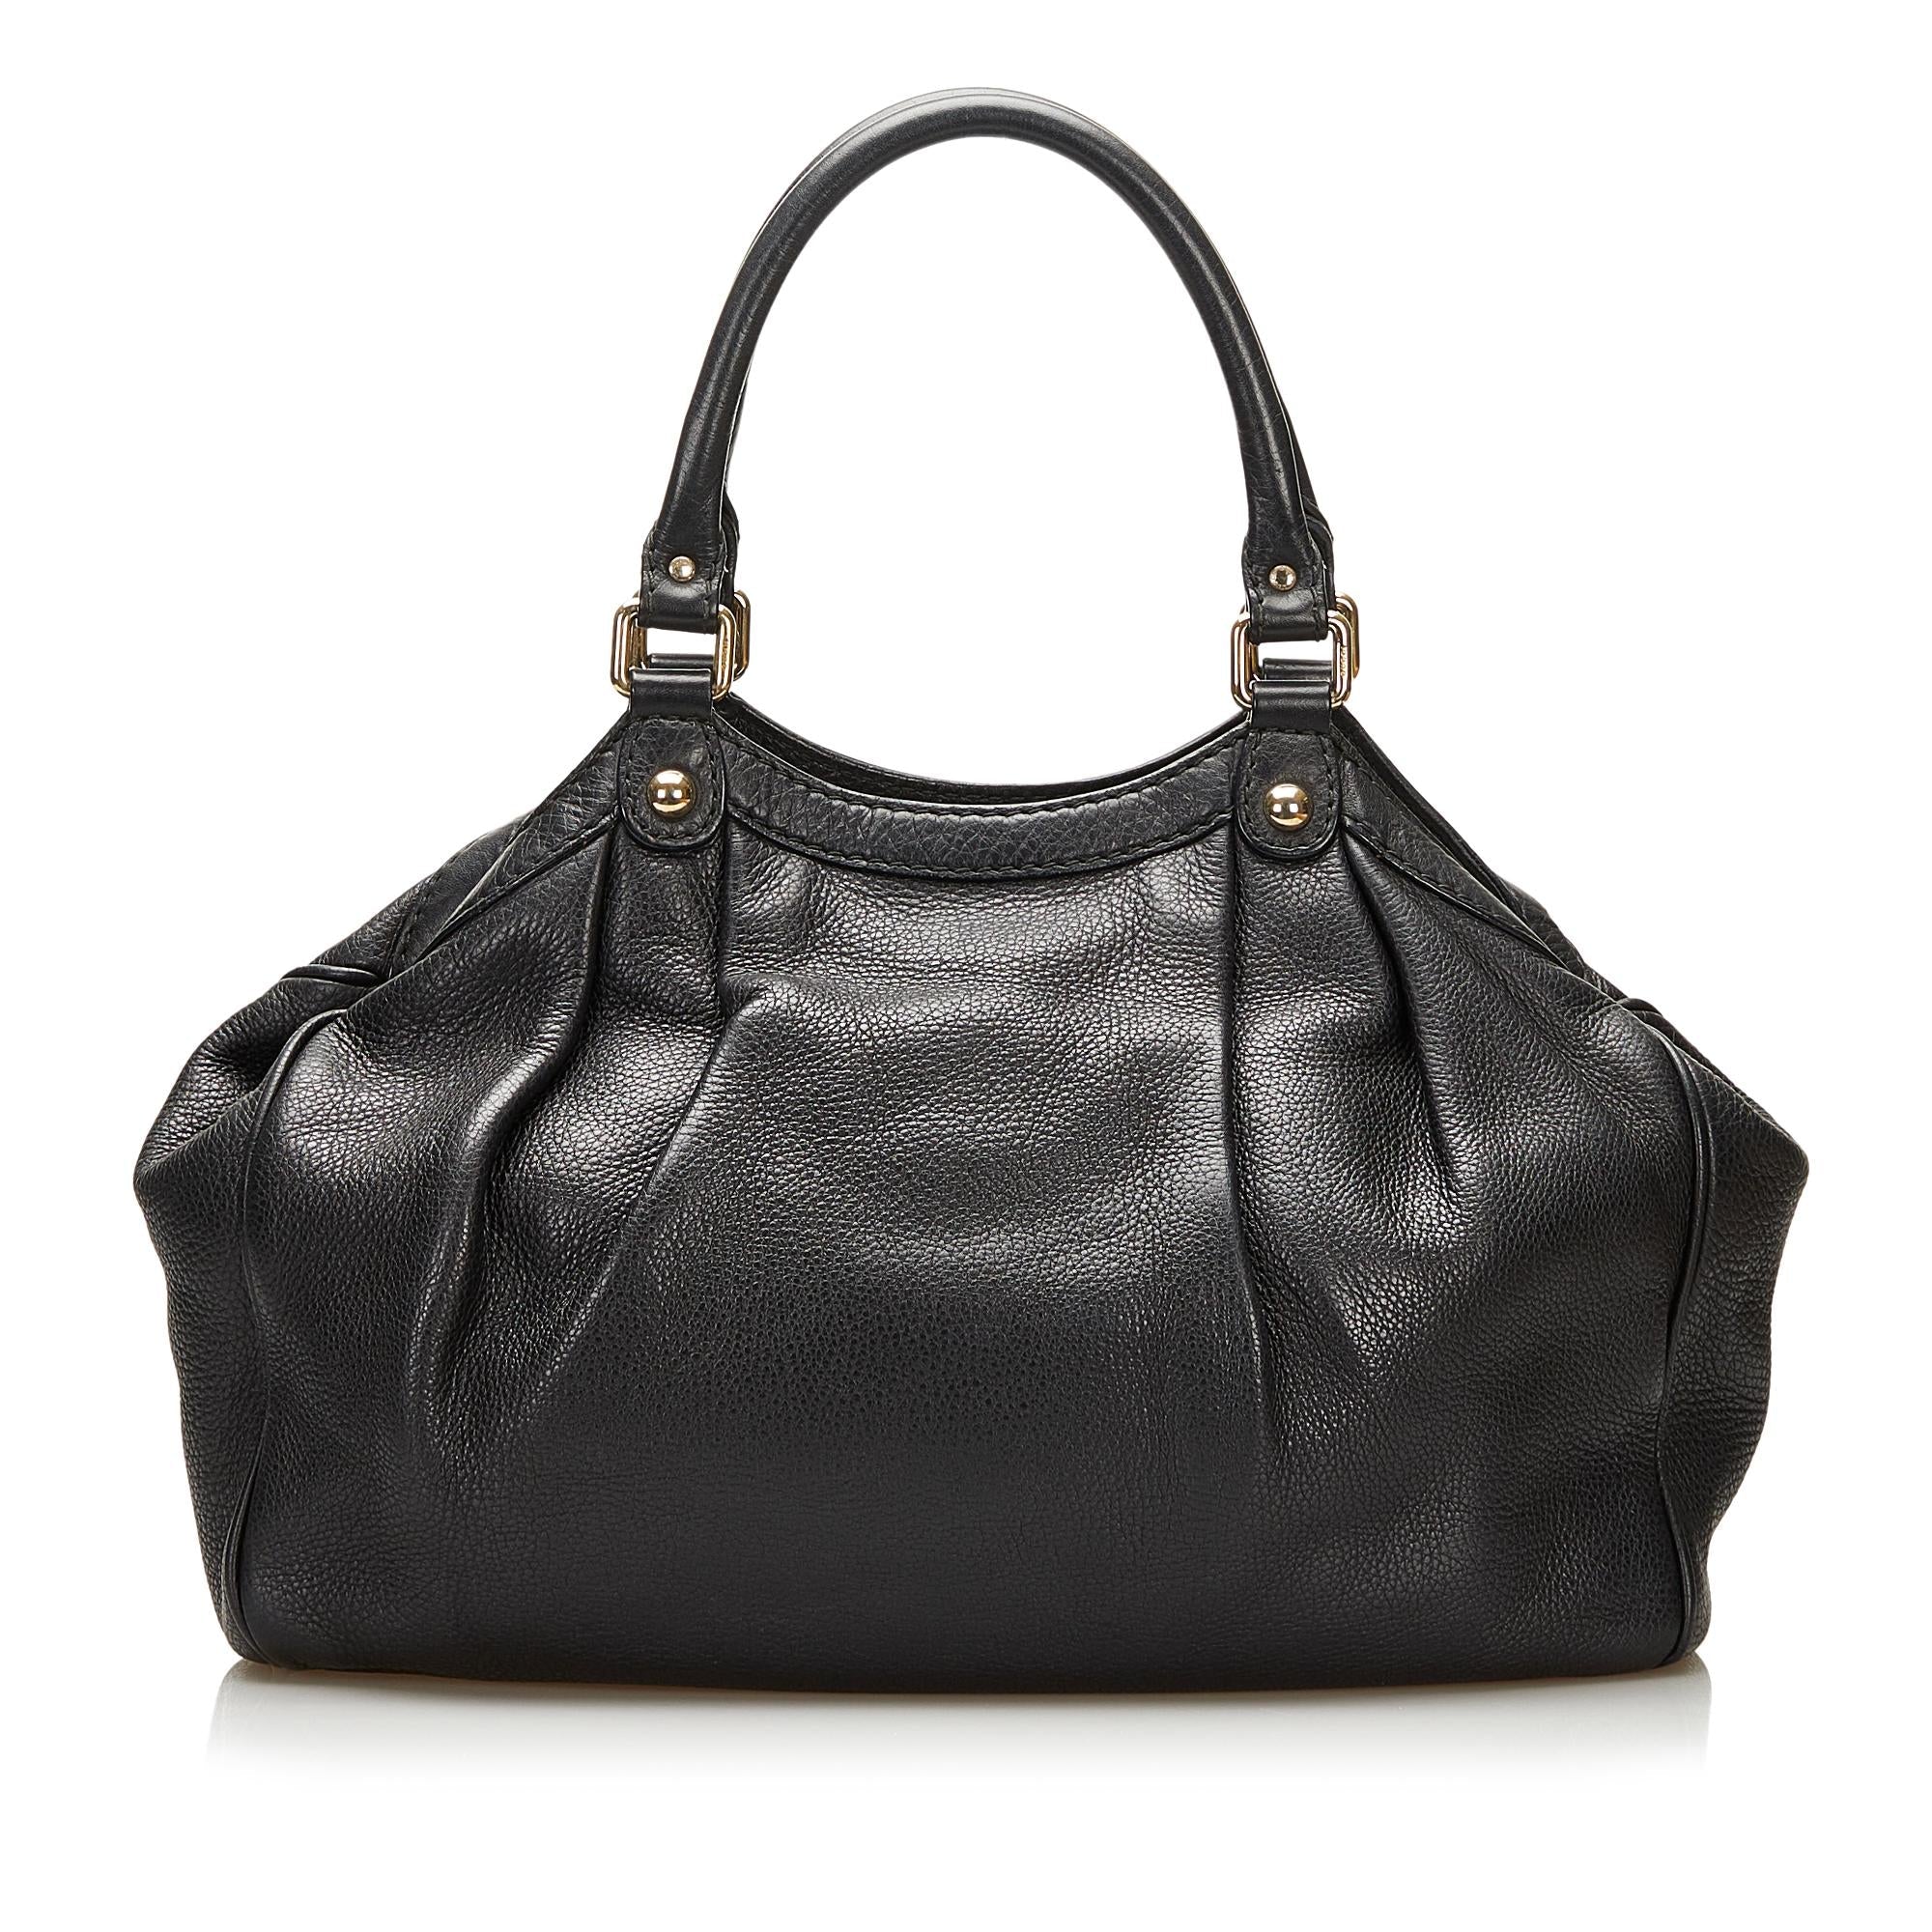 Gucci Sukey Leather Tote Bag